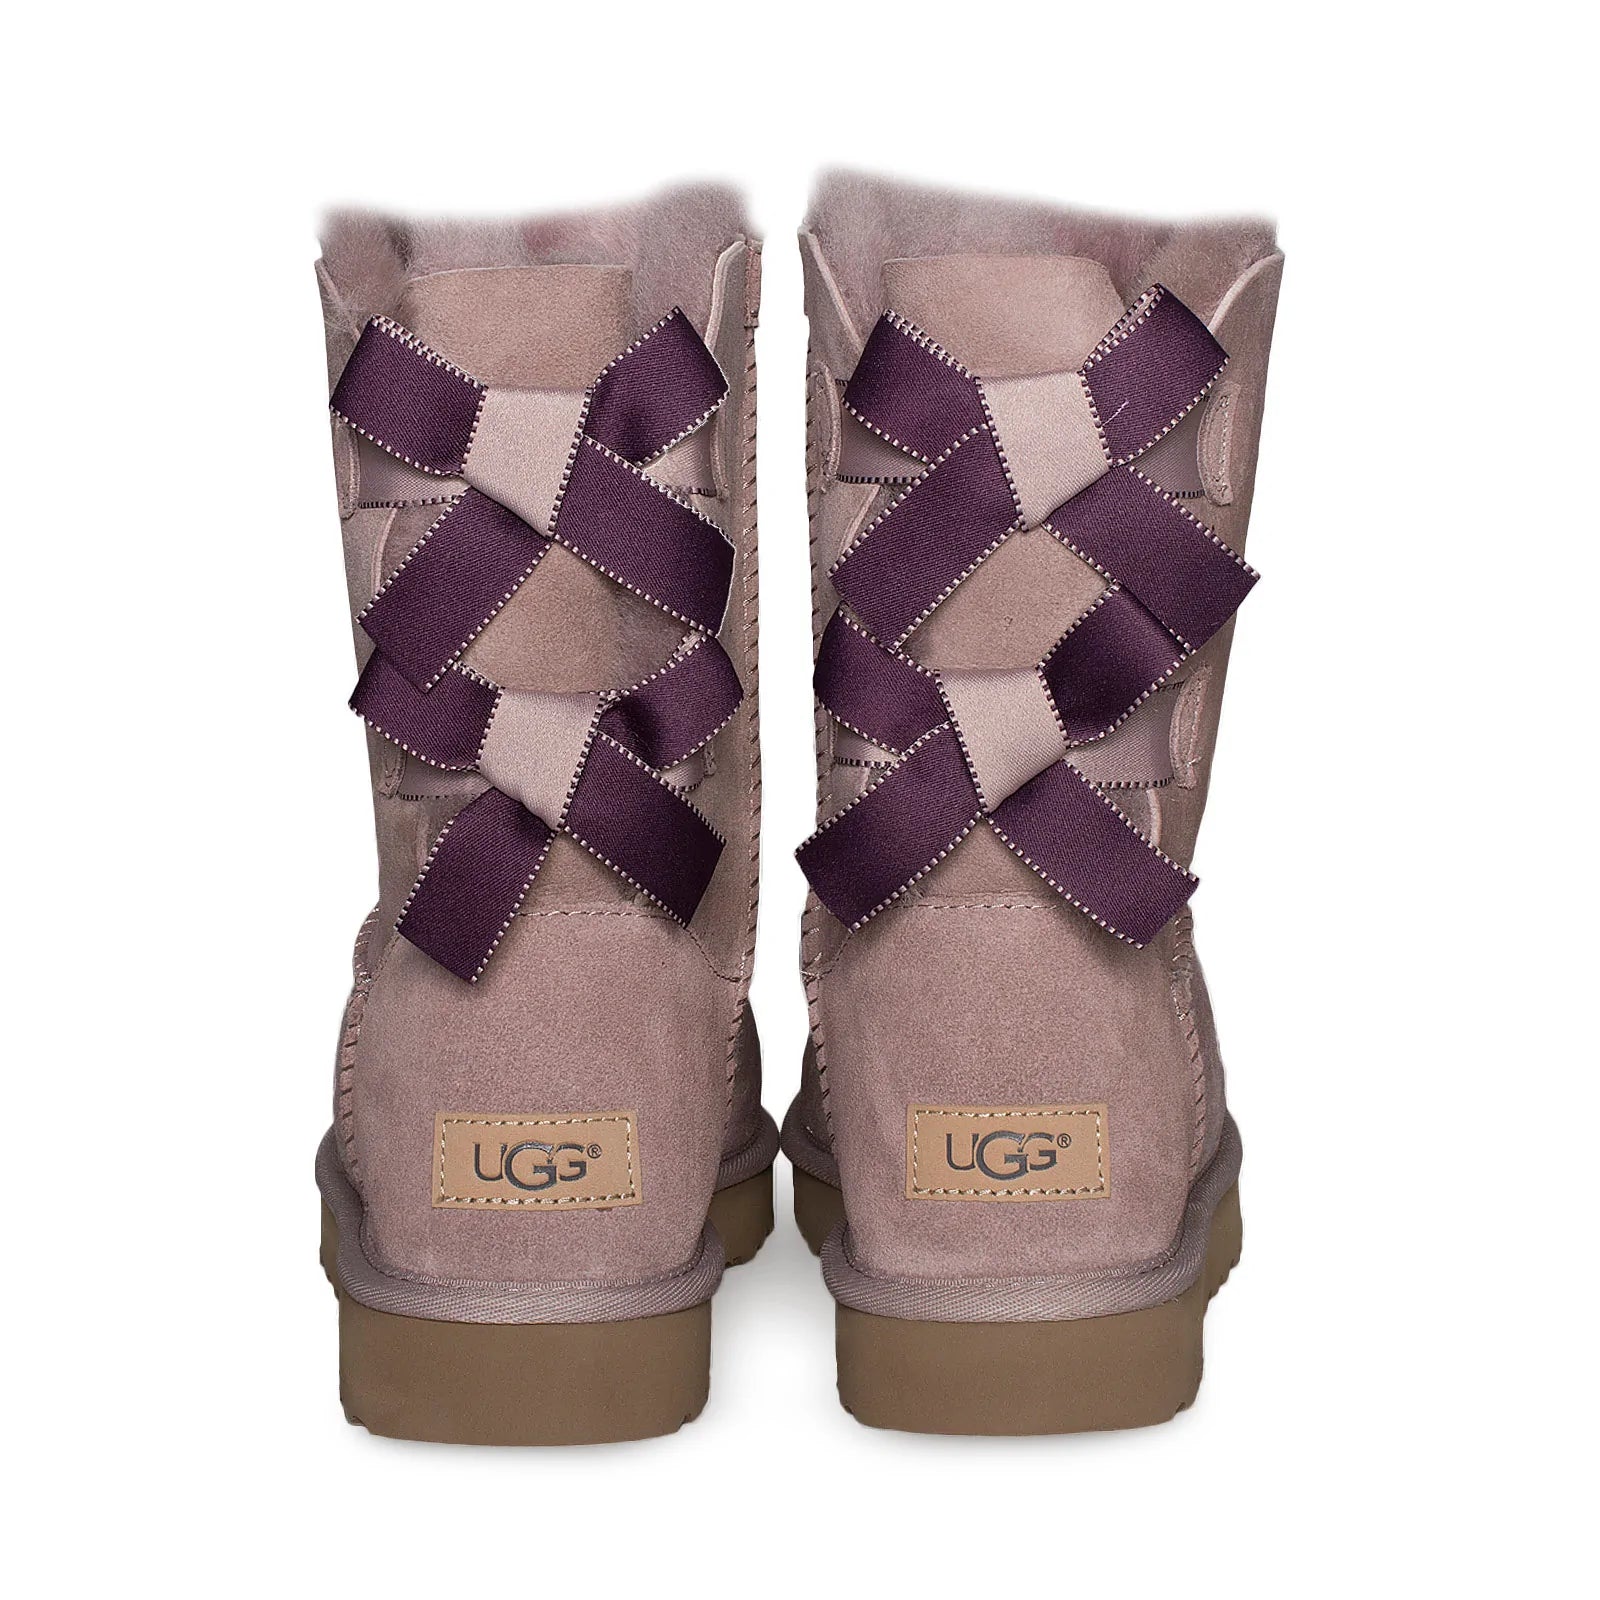 UGG Bailey Bow II Shimmer Dusk Boots - Women's